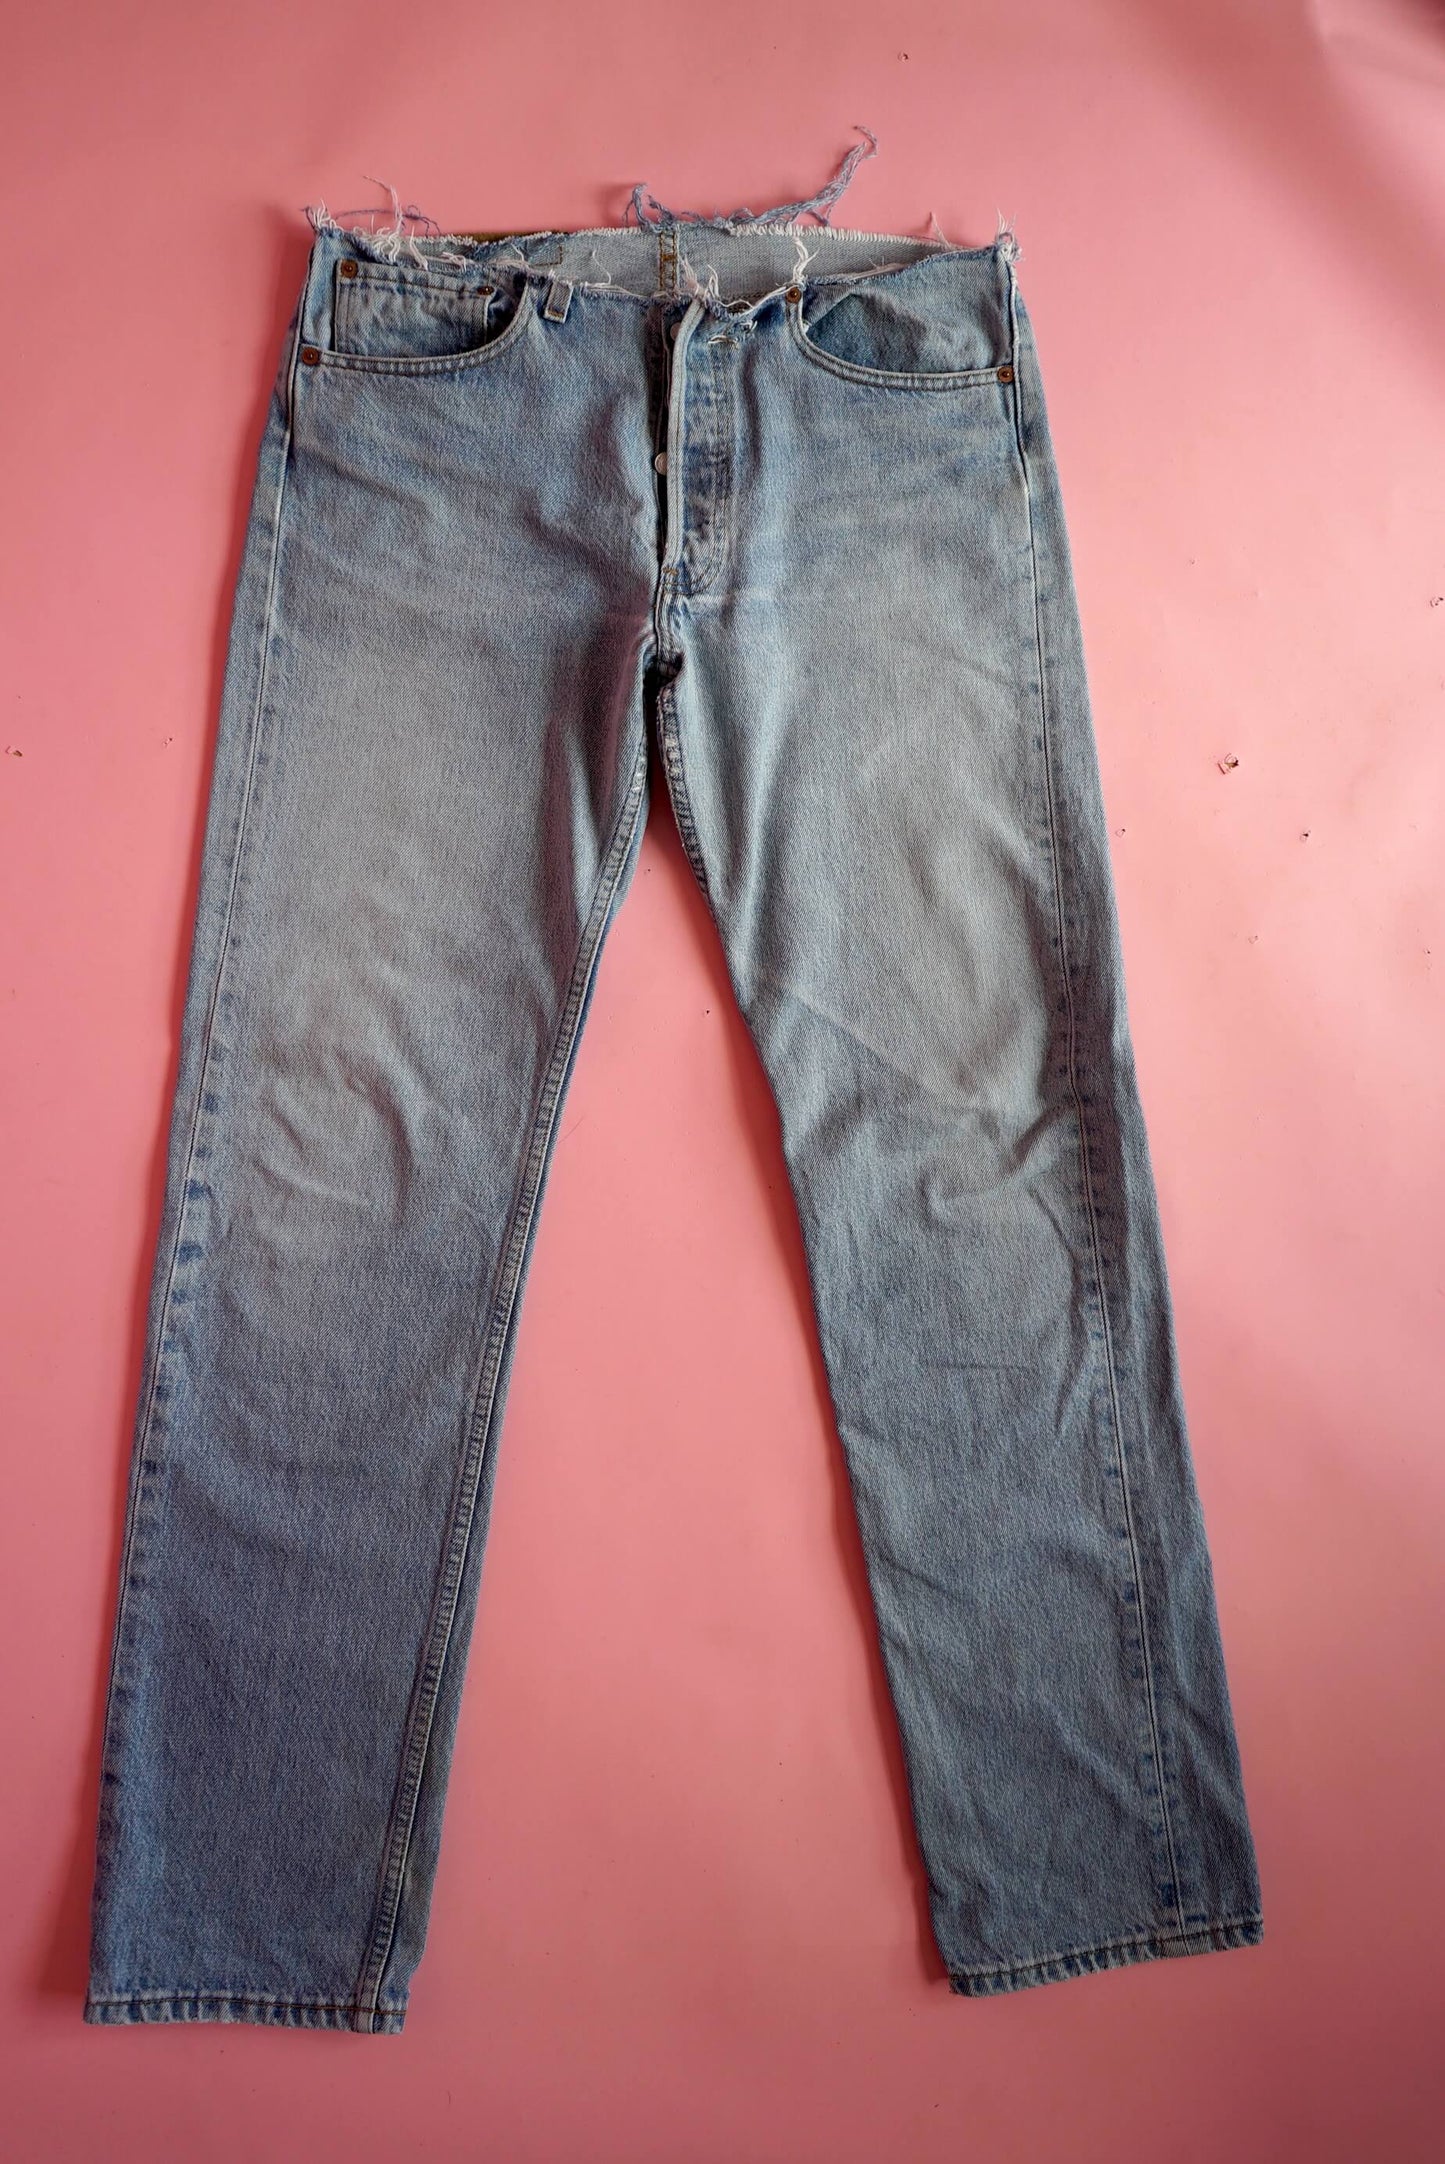 Vintage Levi's 501 Bandless Mariah Carey Low Waist Jeans W32